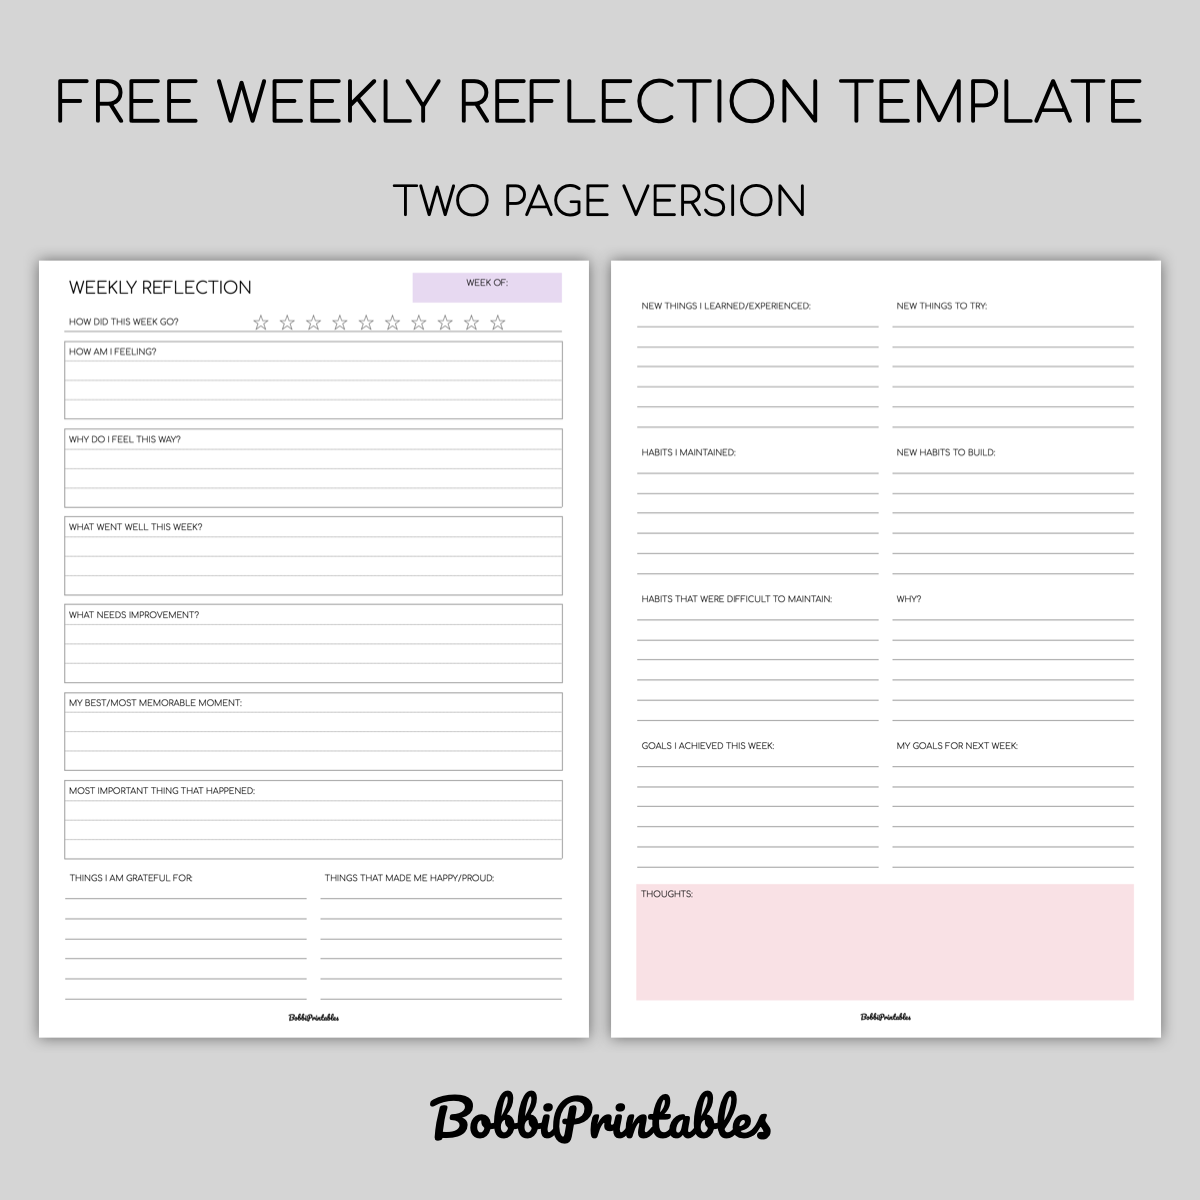 BobbiPrintables — Free Printable Weekly Reflection Template 2 Page...